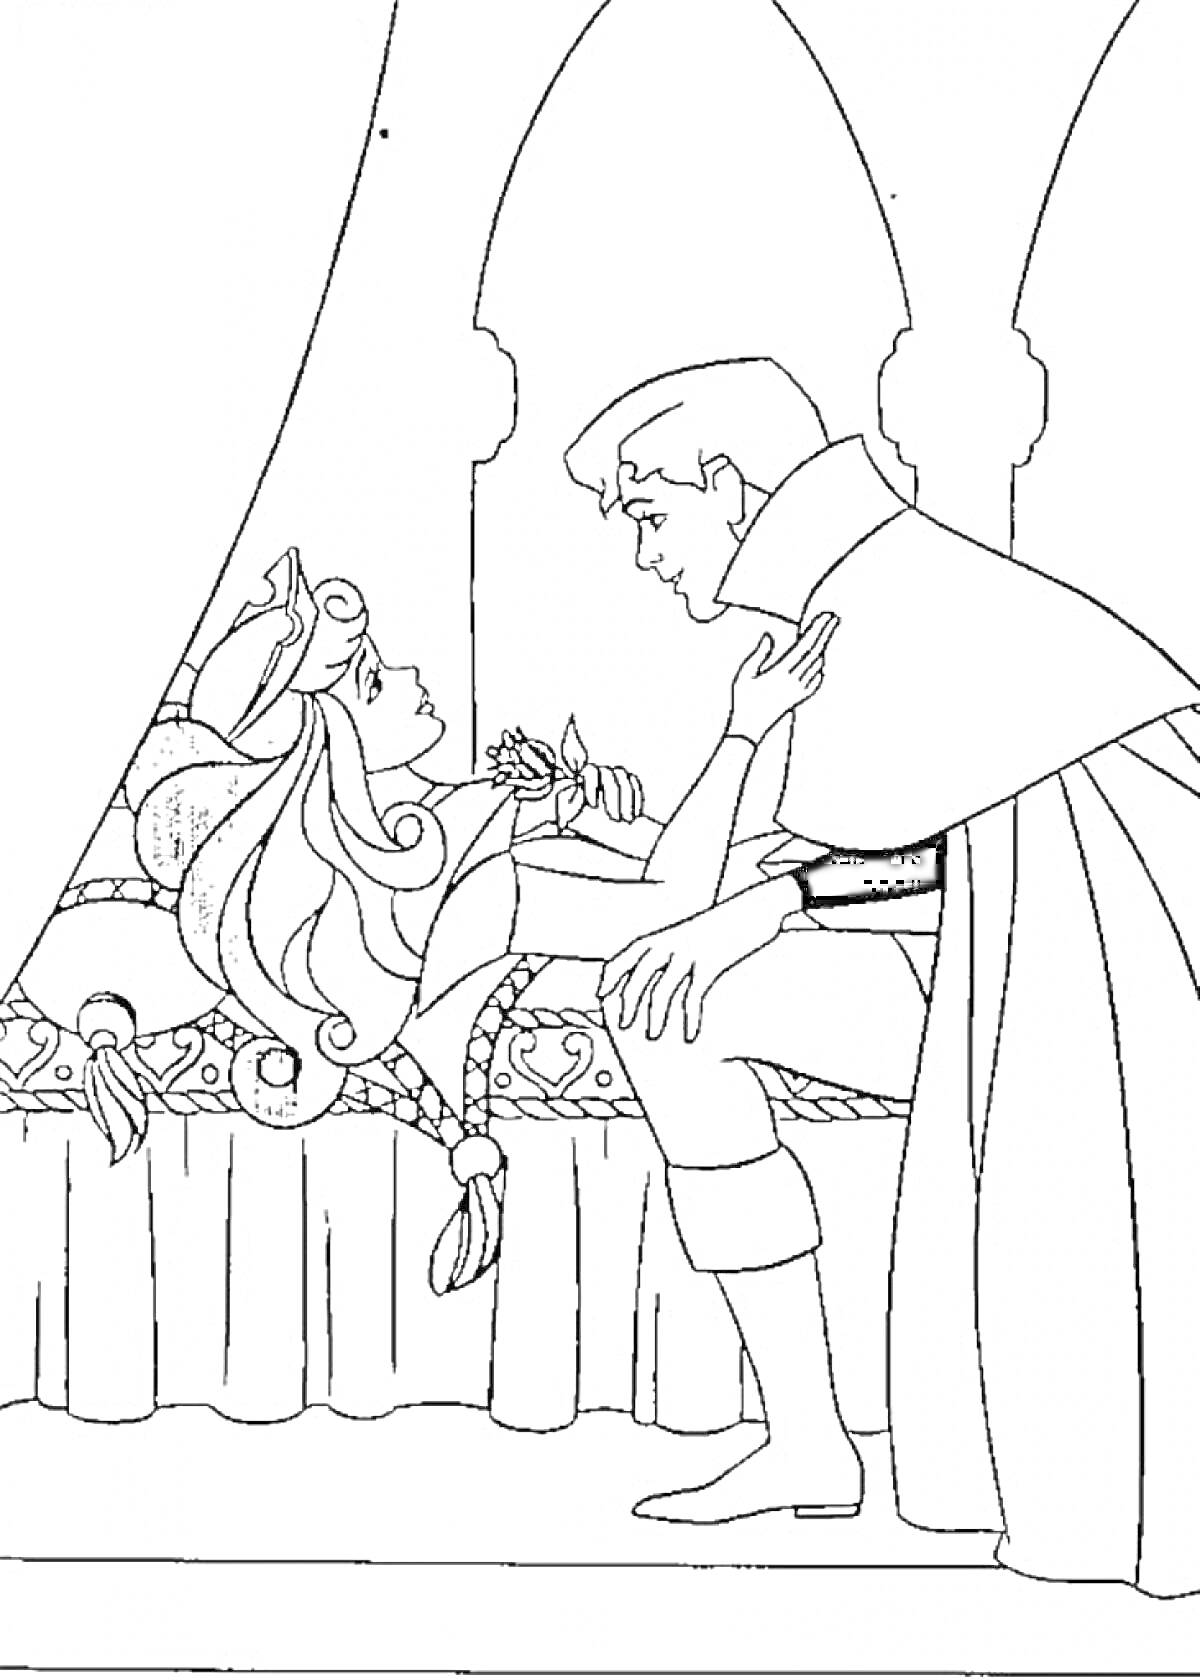 Спящая красавица на постели и принц с розой в руке, завеса и арки на заднем плане